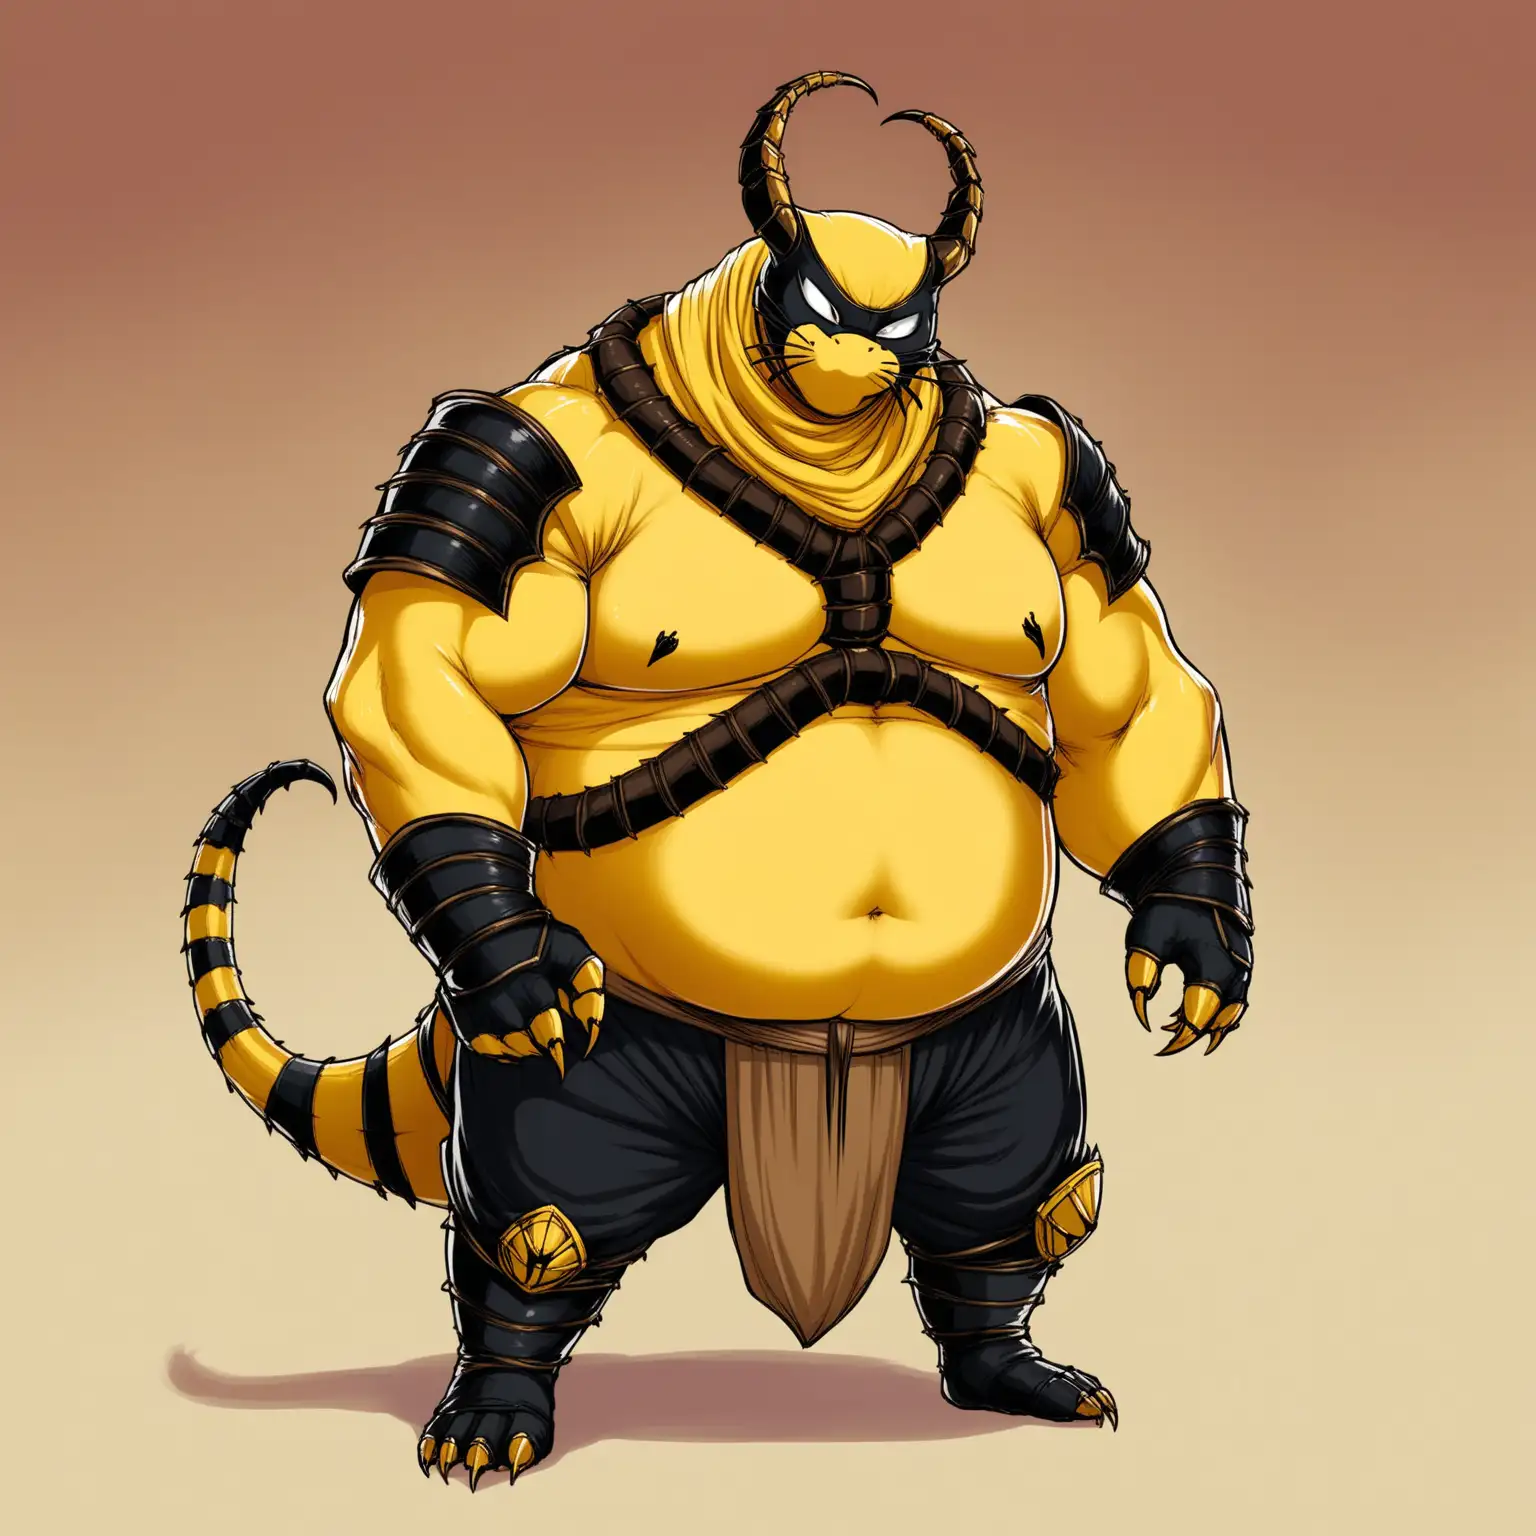 Mordenkainen the cat blonde fat catman warrior dressed as scorpion from mortal combat